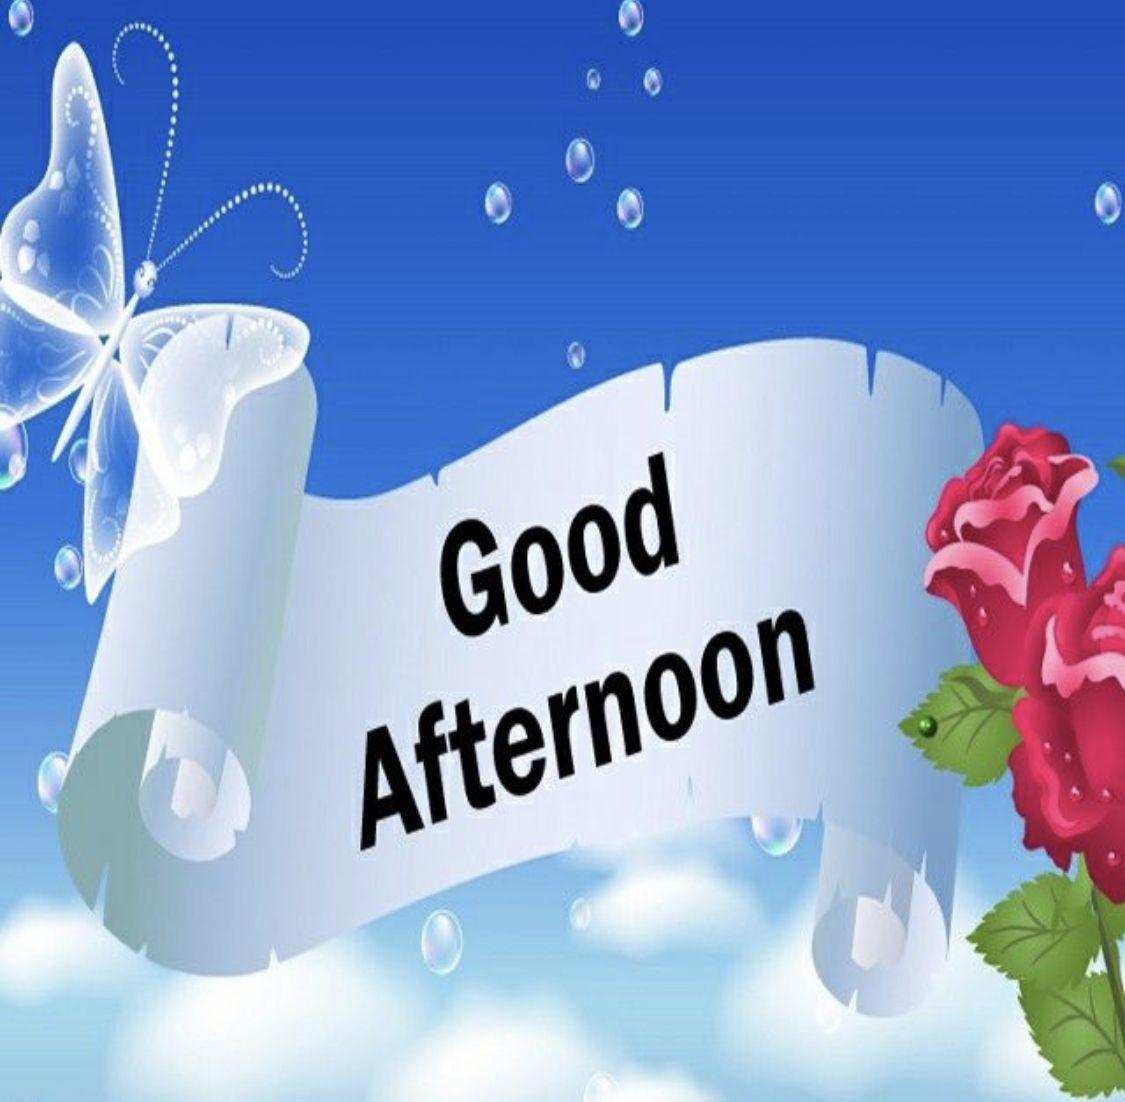 Good Afternoon

Have a blessed day ahead

#บอลไทย #netsat #verydarkman #natashastpier #TheBachelorFinale